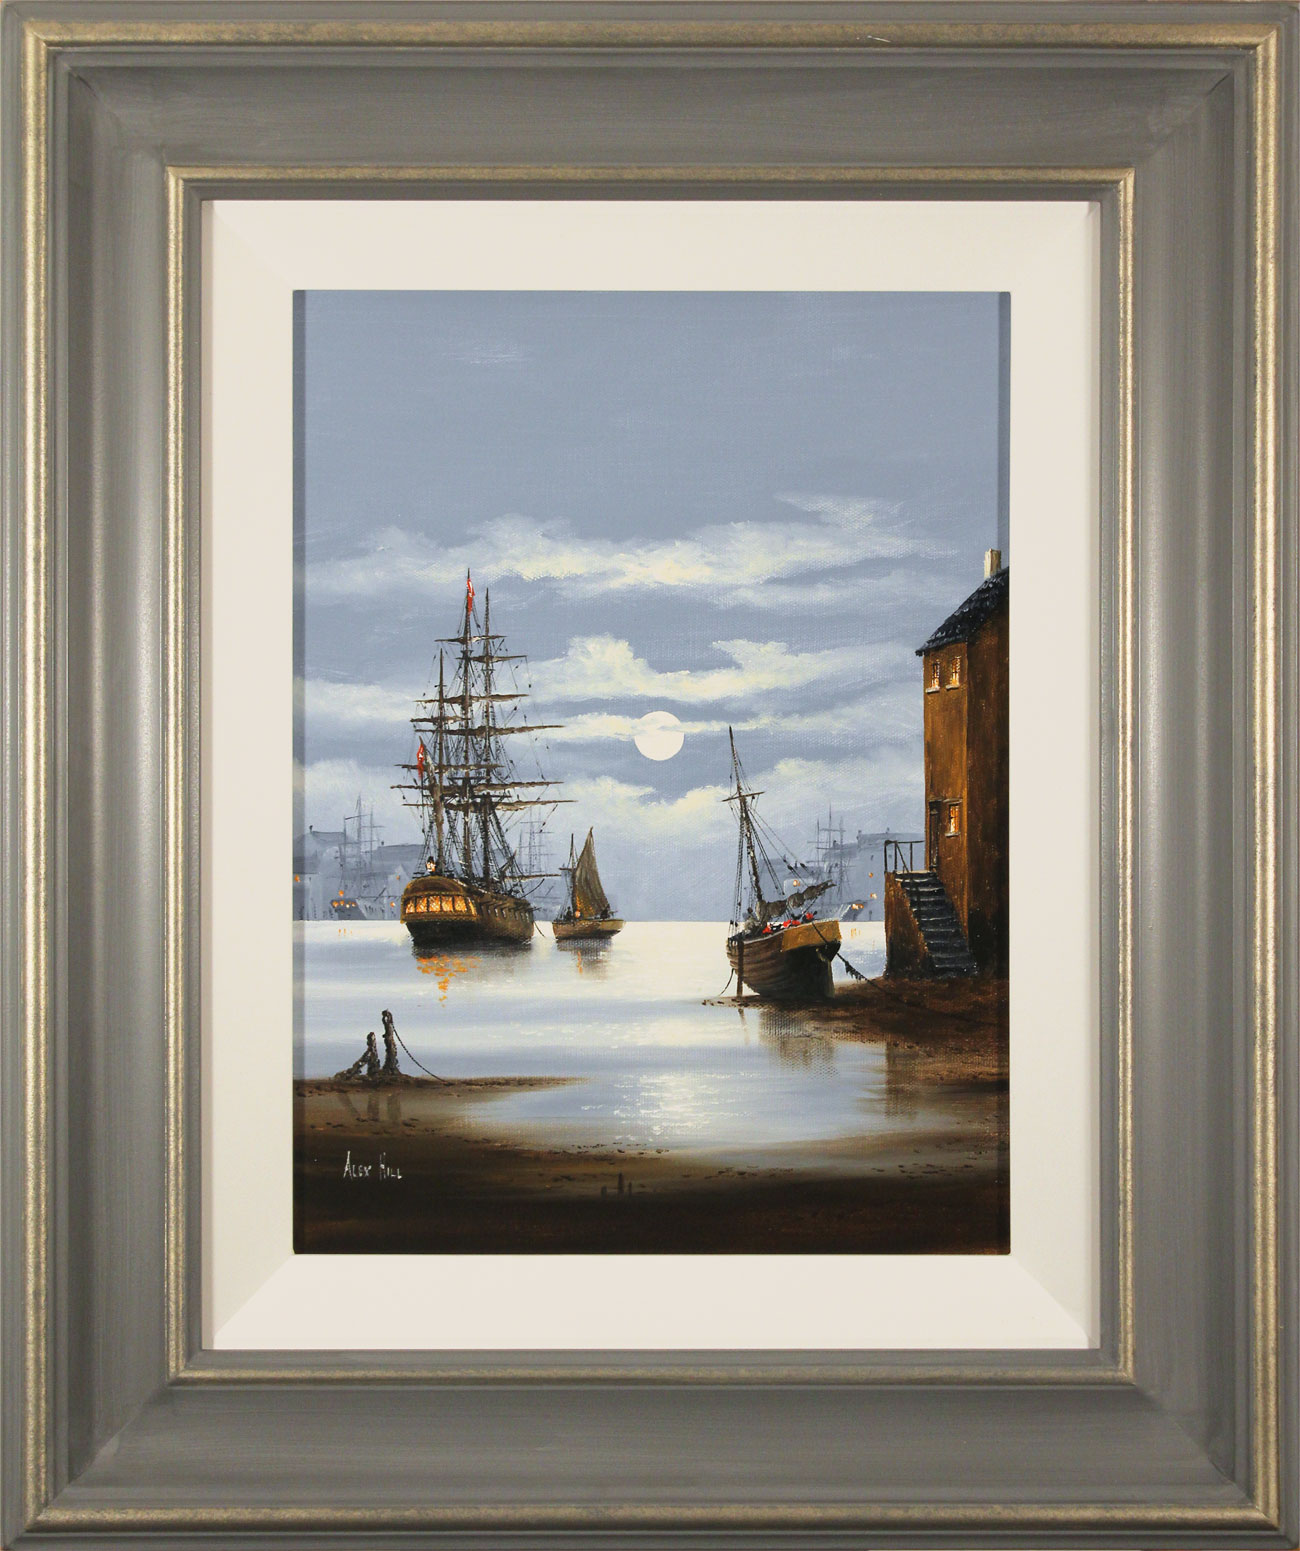 Alex Hill, Original oil painting on canvas, Leaving Harbour